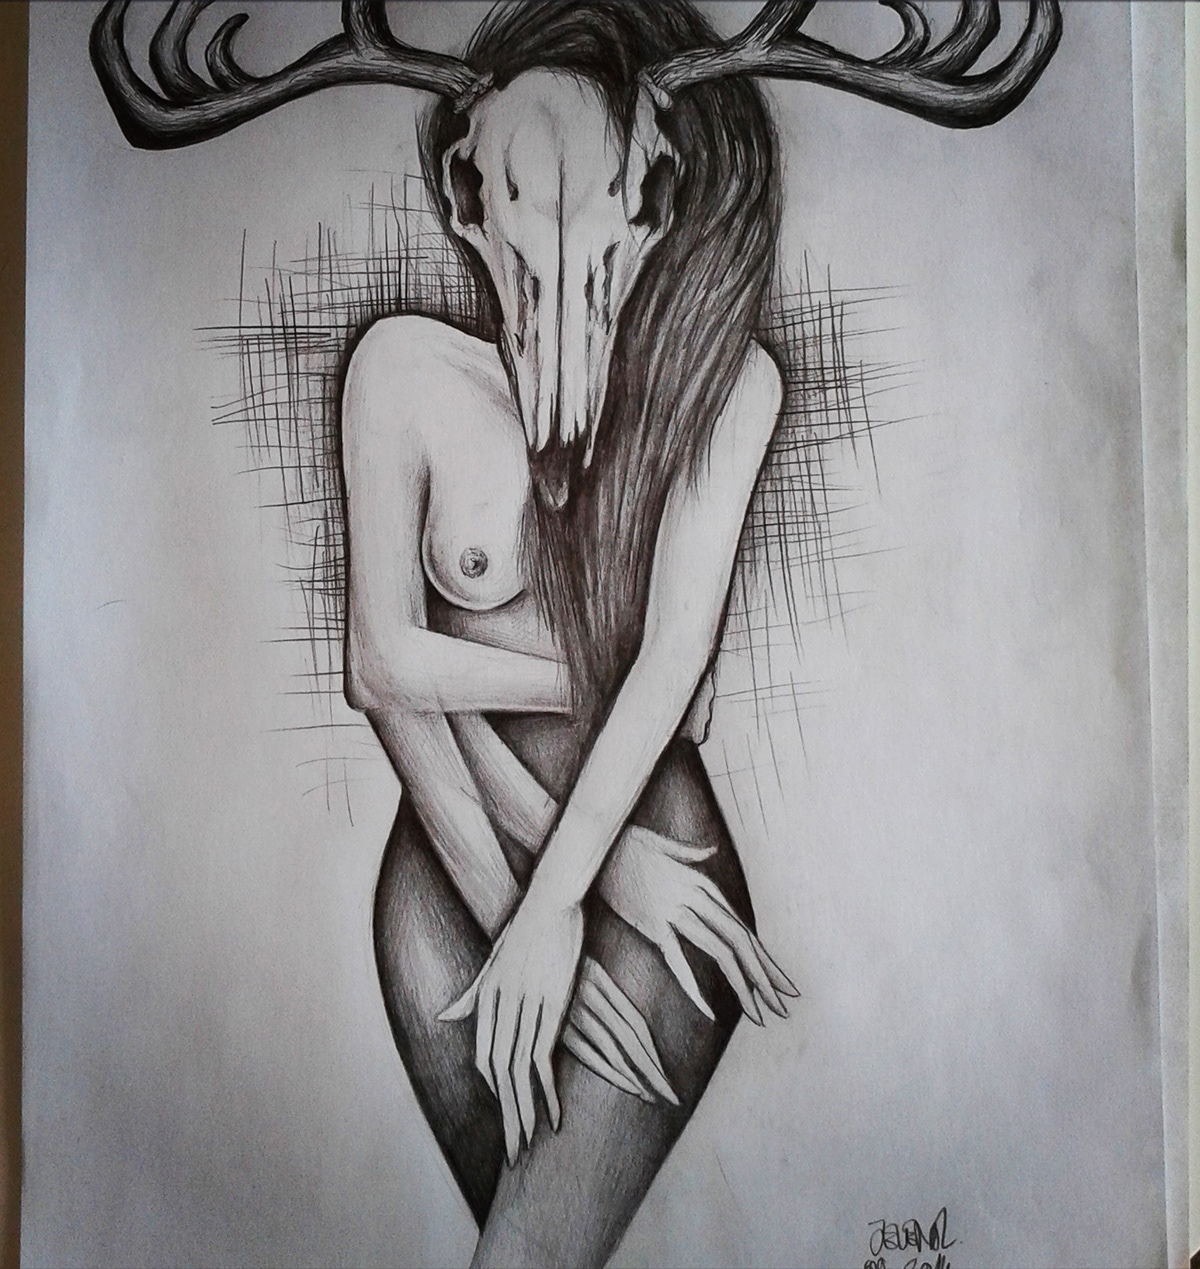 deer woman deerwoman drawings blackandwhite sketch tattoo tattoodesign   pencil